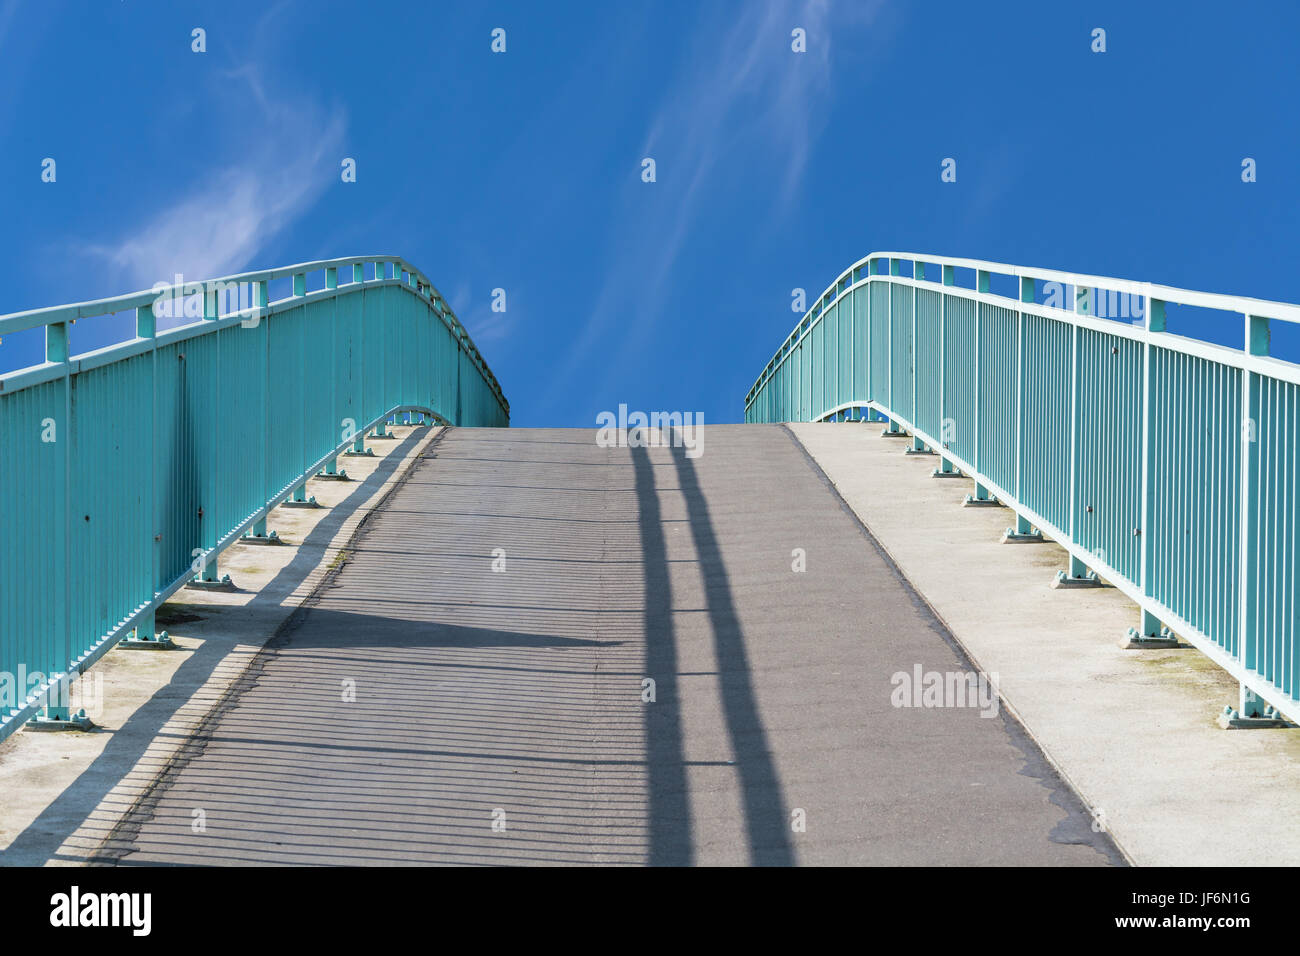 Fußgängerbrücke aus Stahl Bogen Struktur Stockfoto